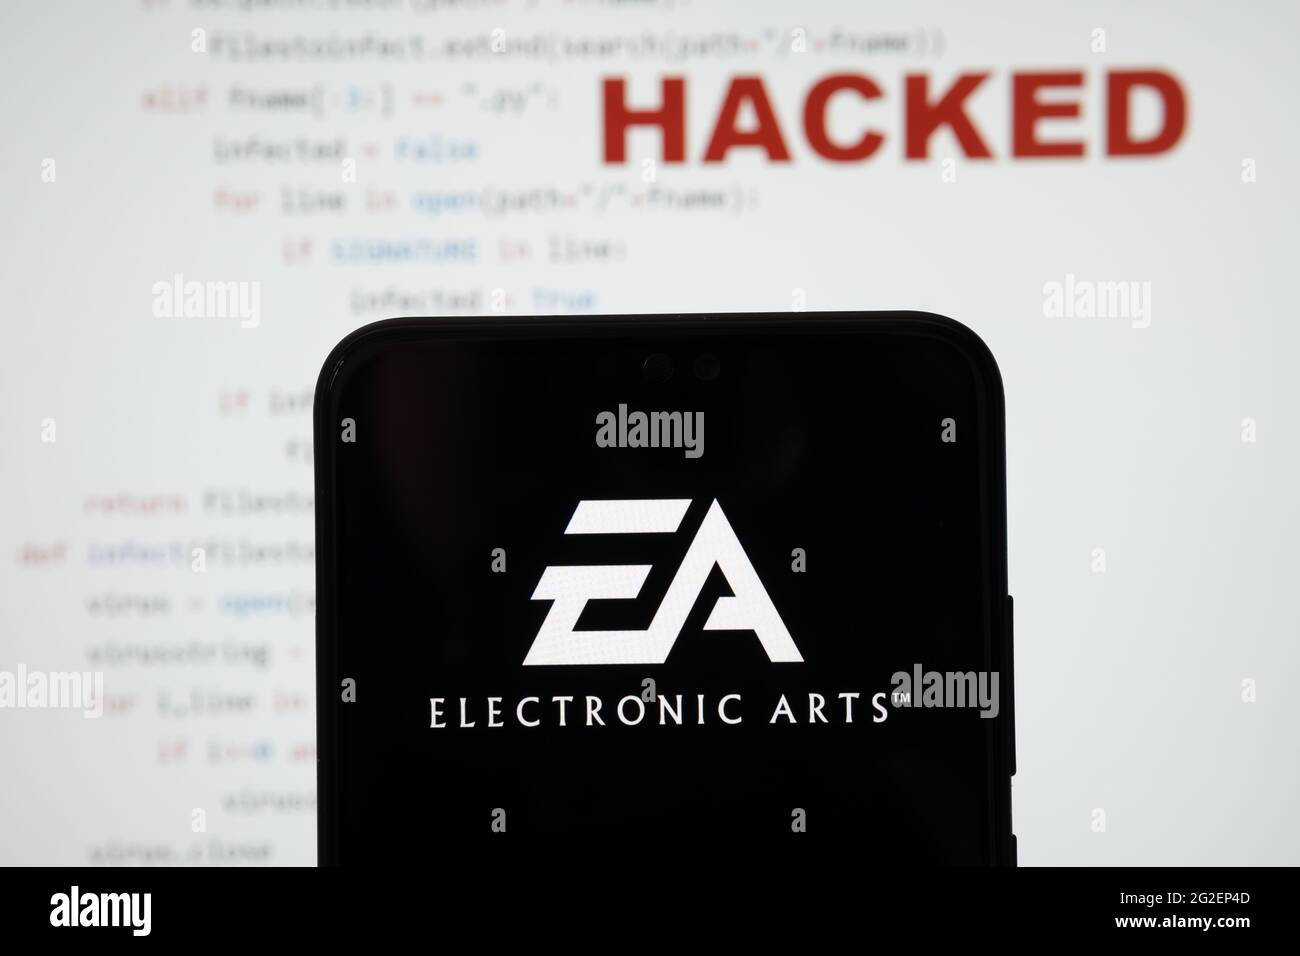 EA sports hack concept Stock Photo